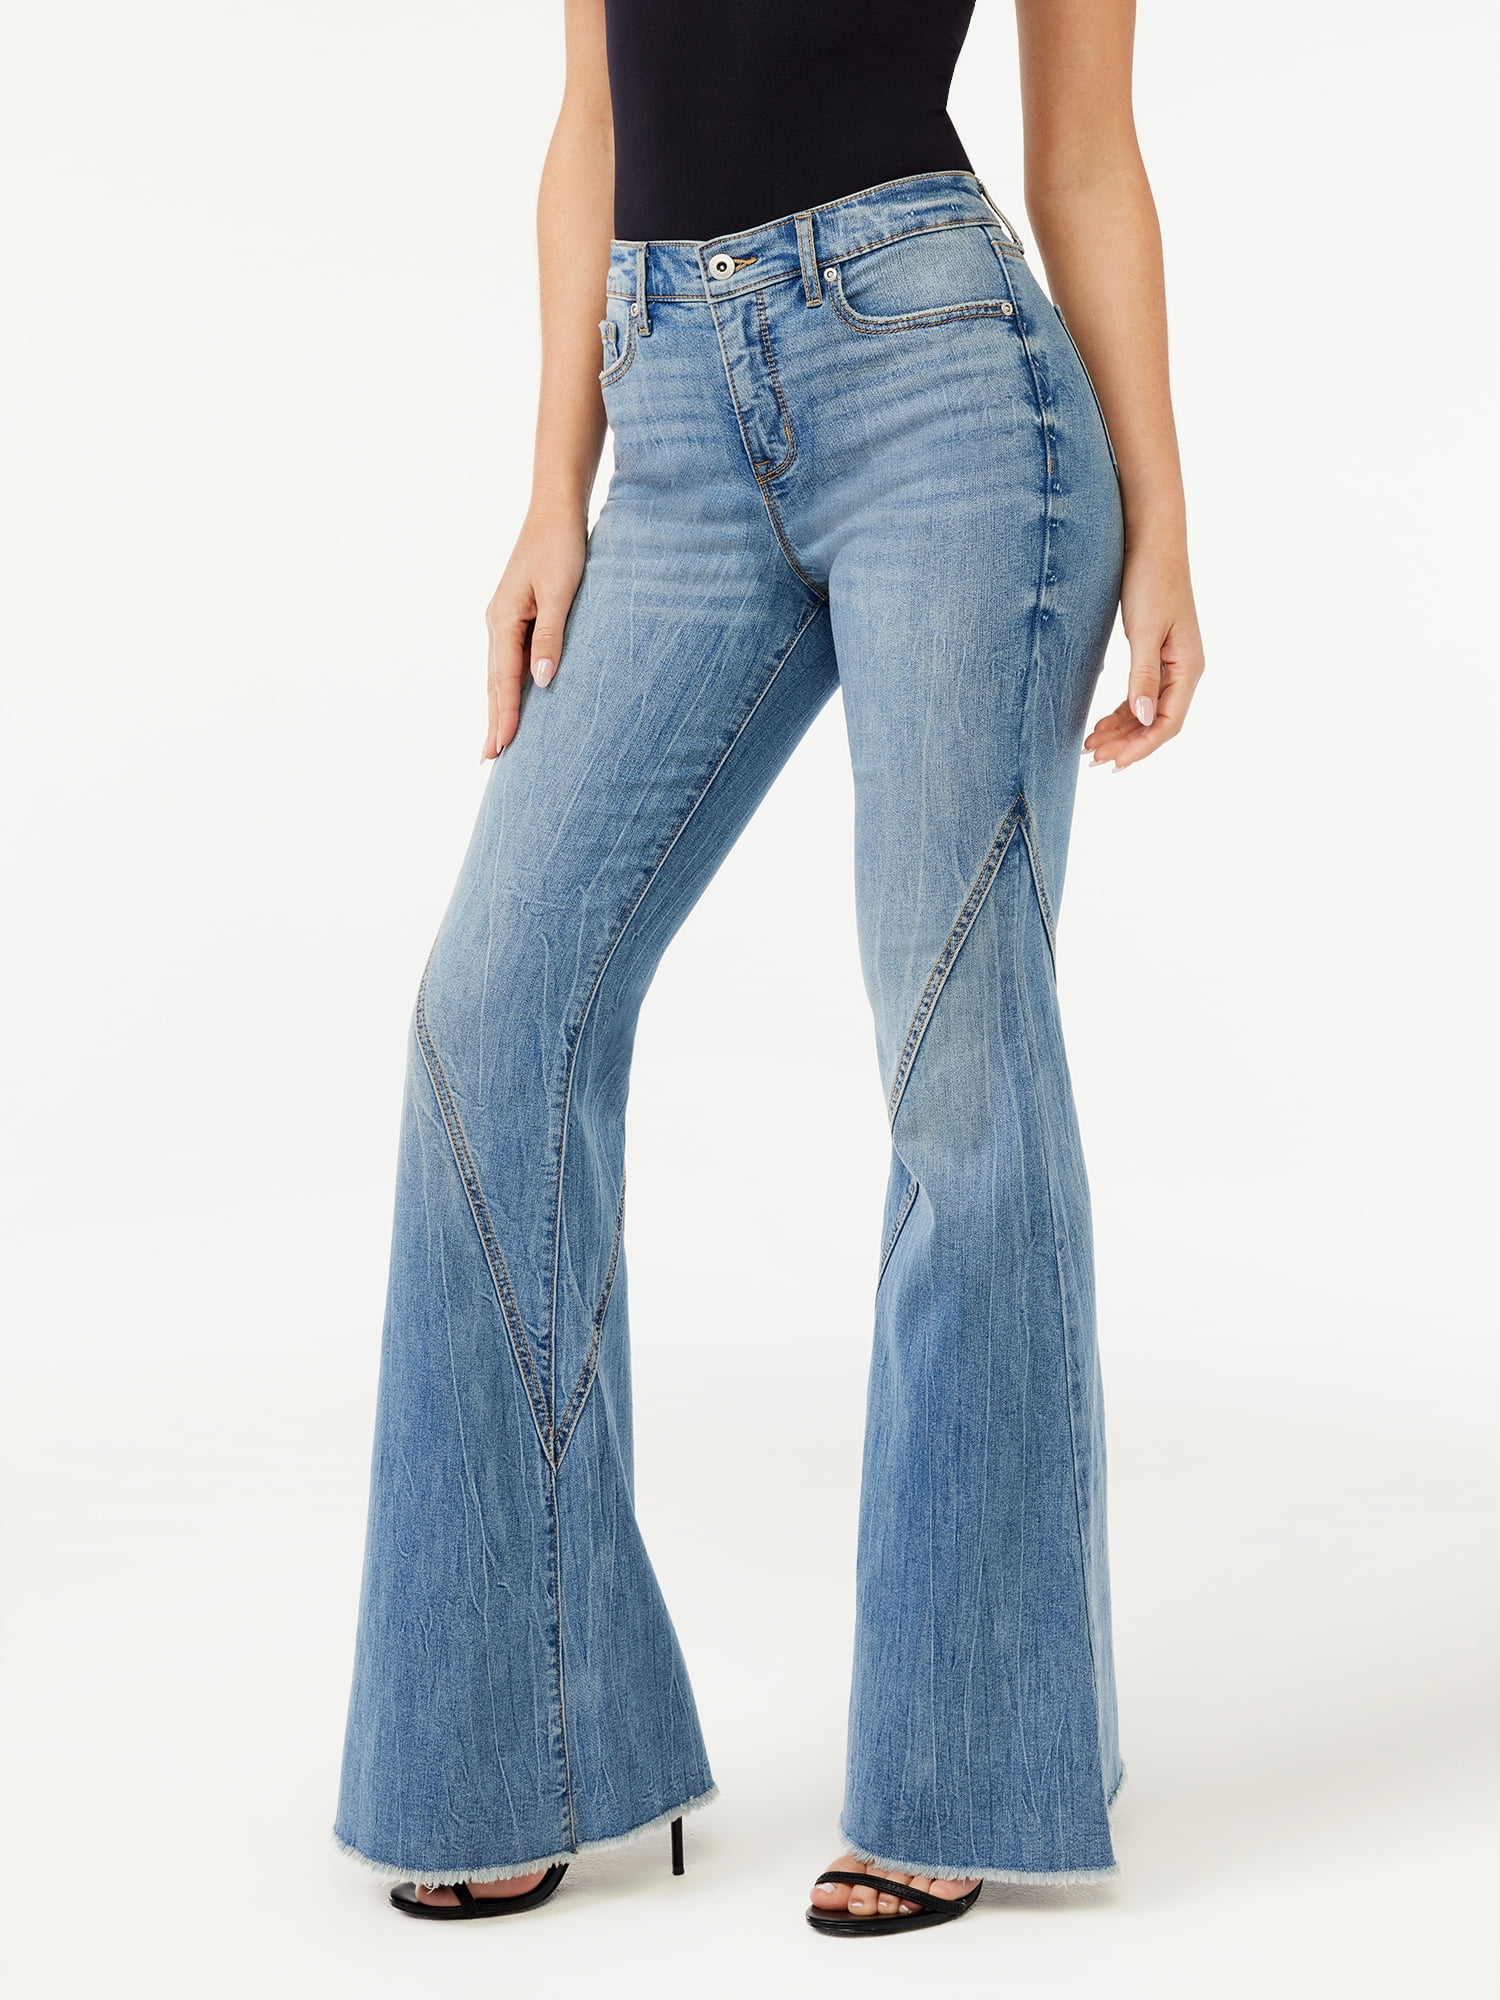 Sofia Jeans Women's Melisa High Rise Super Flare Jeans - Walmart.com